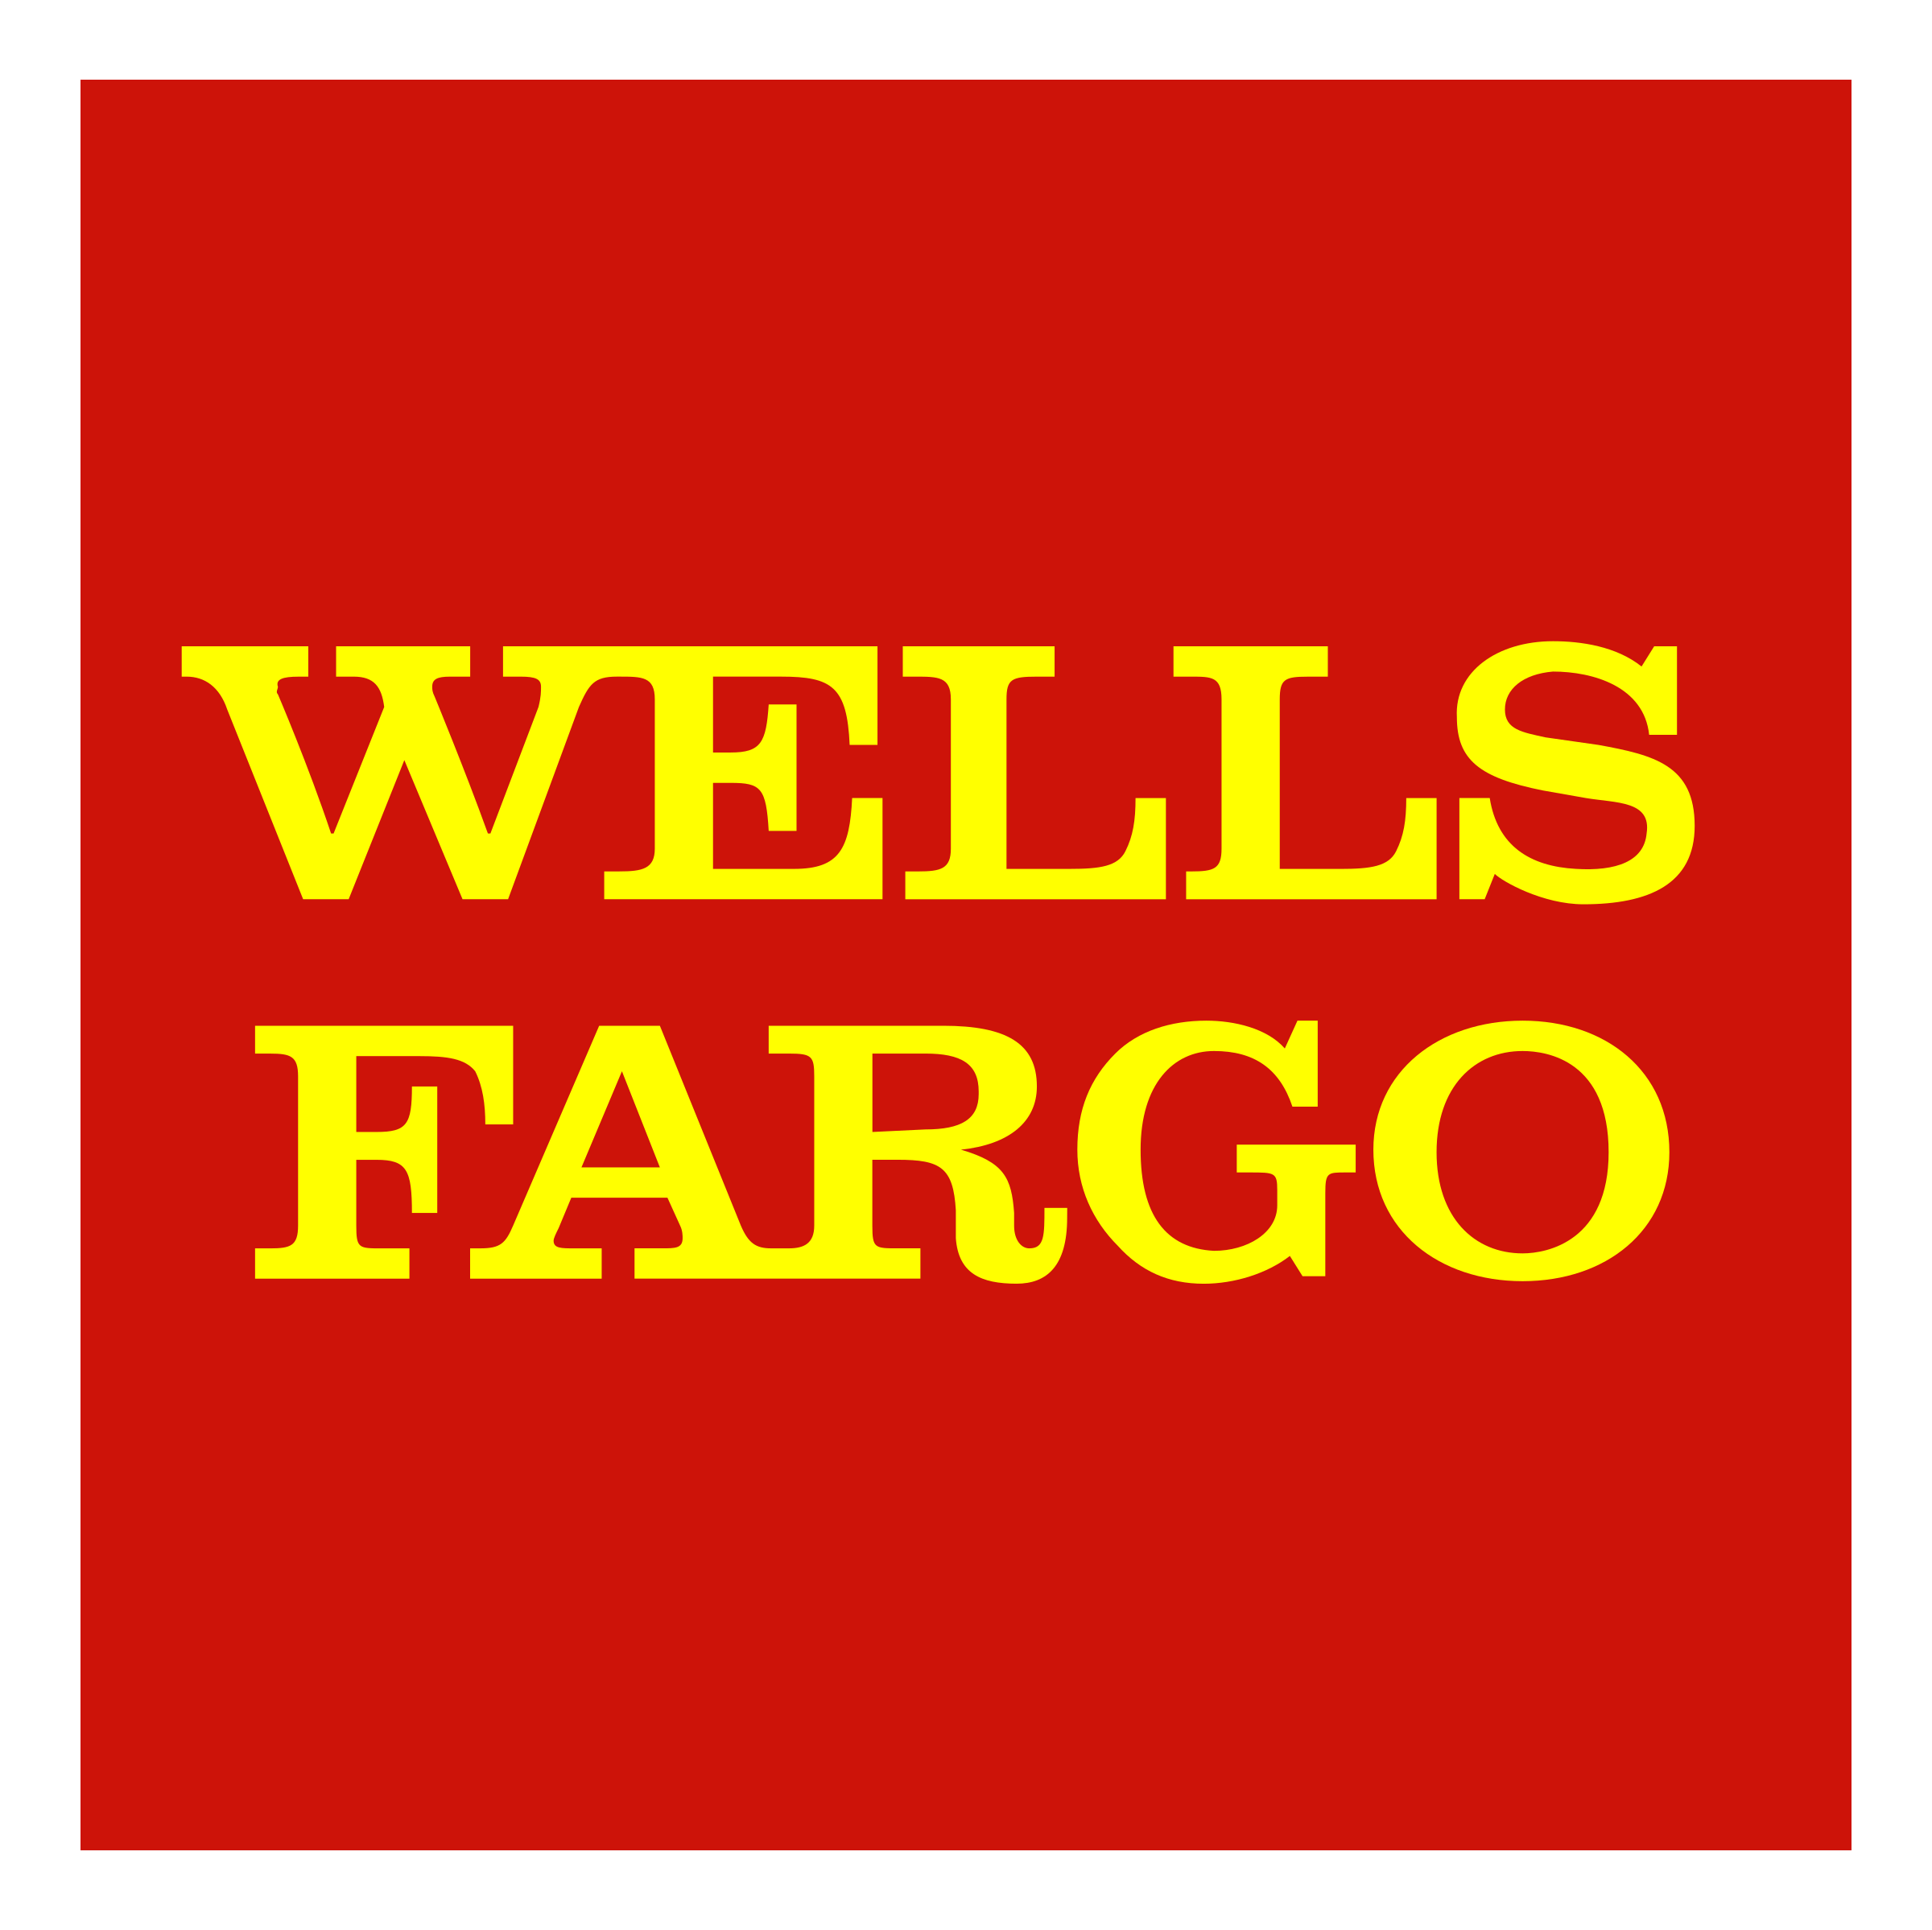 wells-fargo-logo-transparent.png